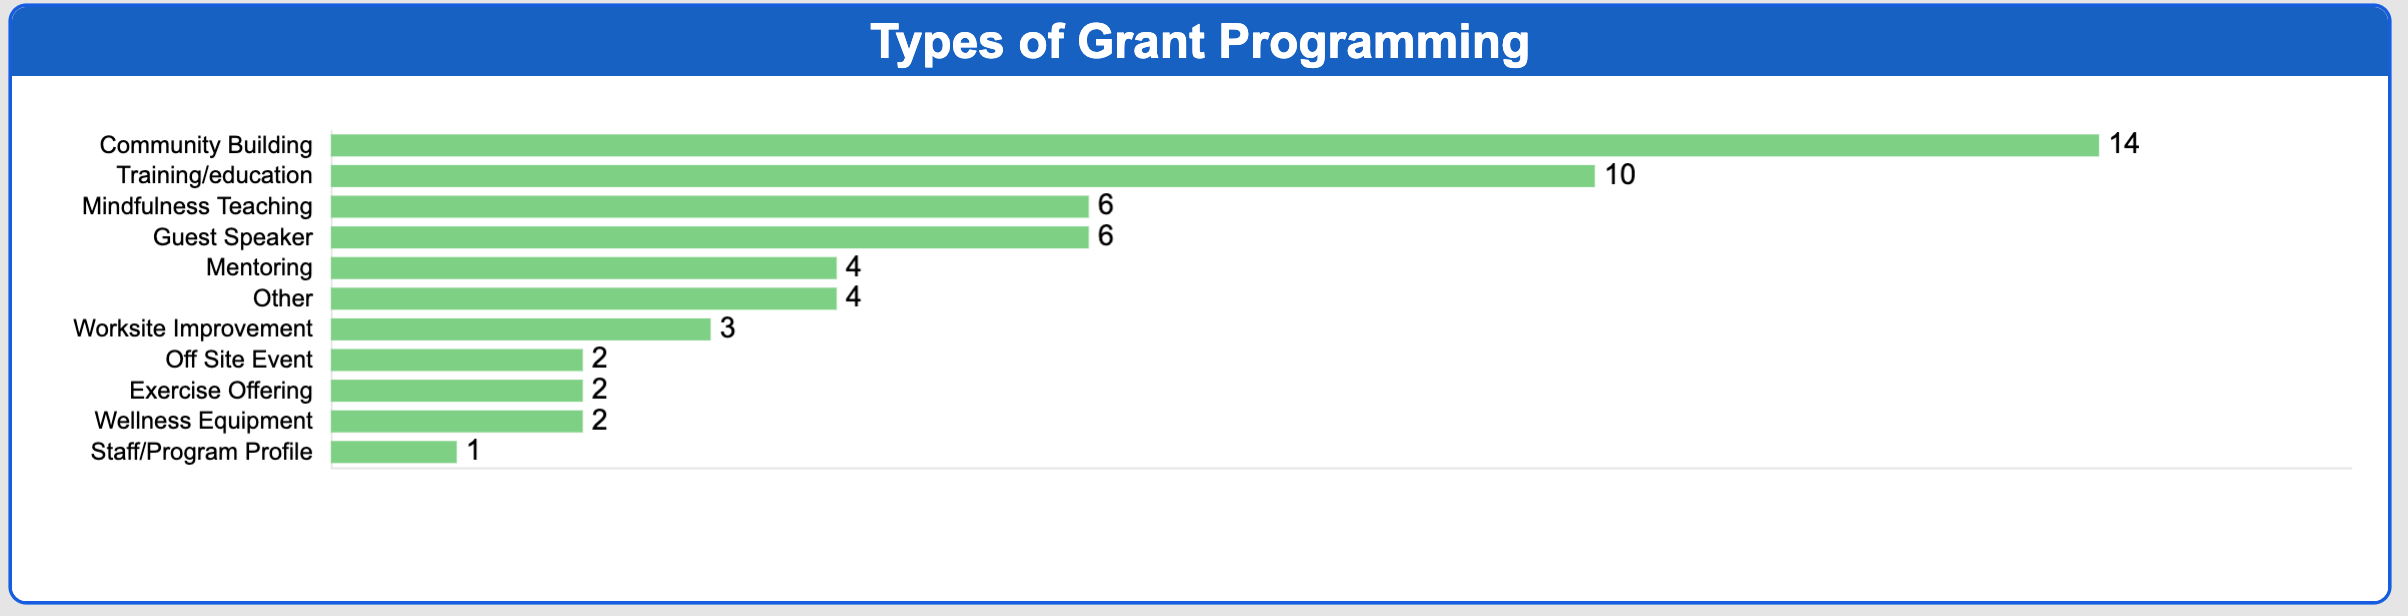 types of programming in cwg grants